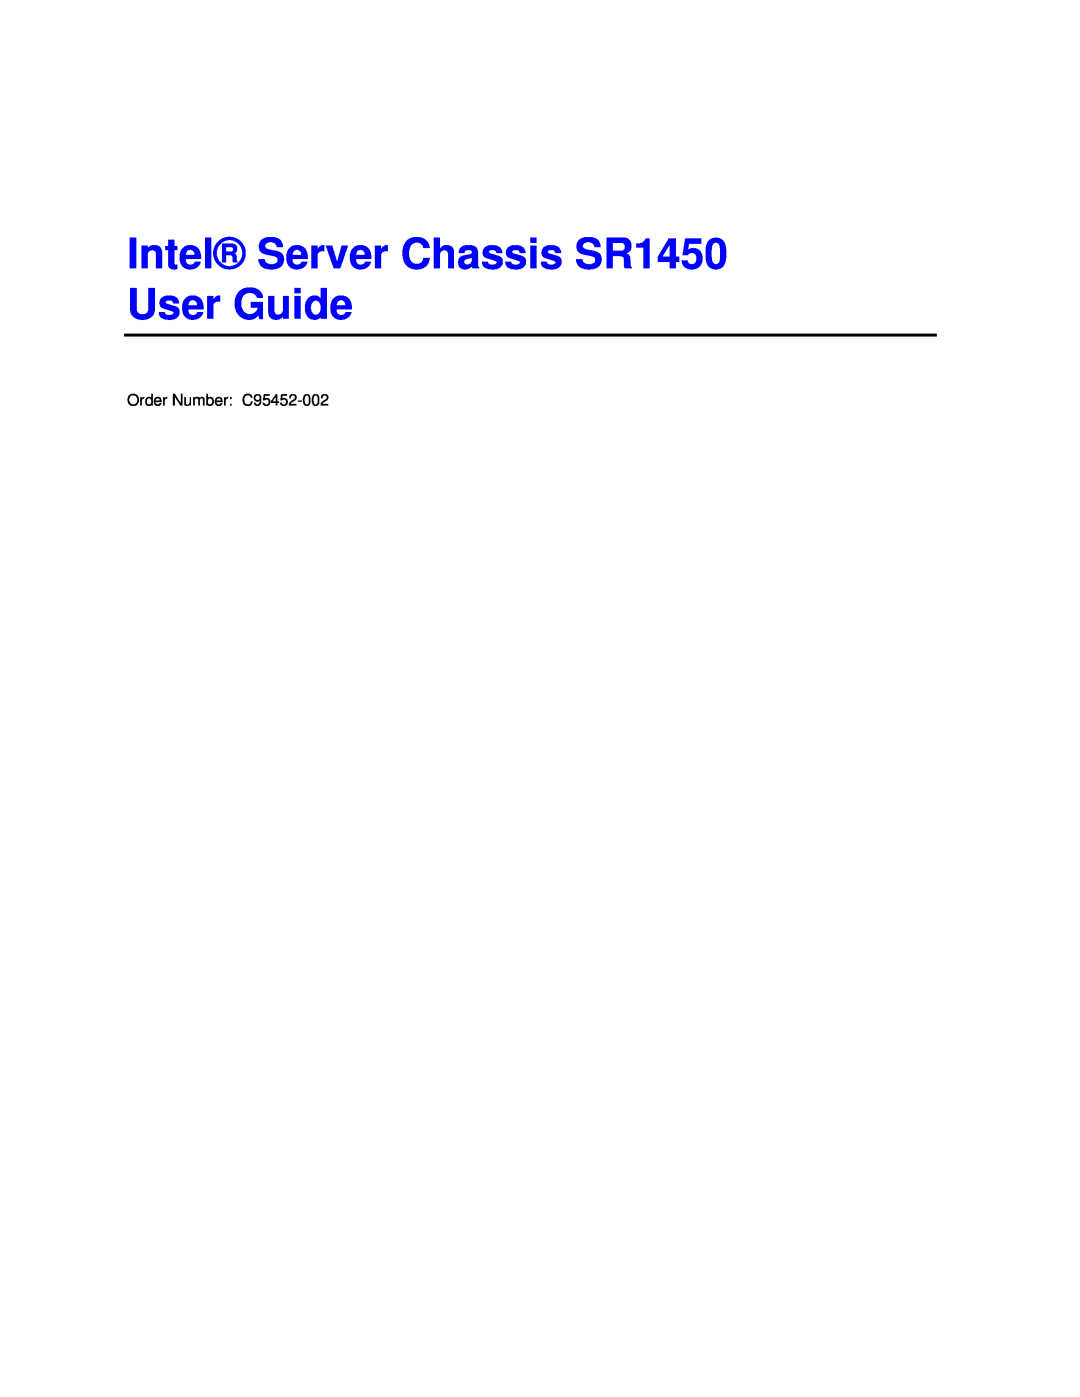 Intel manual Intel Server Chassis SR1450 User Guide, Order Number: C95452-002 